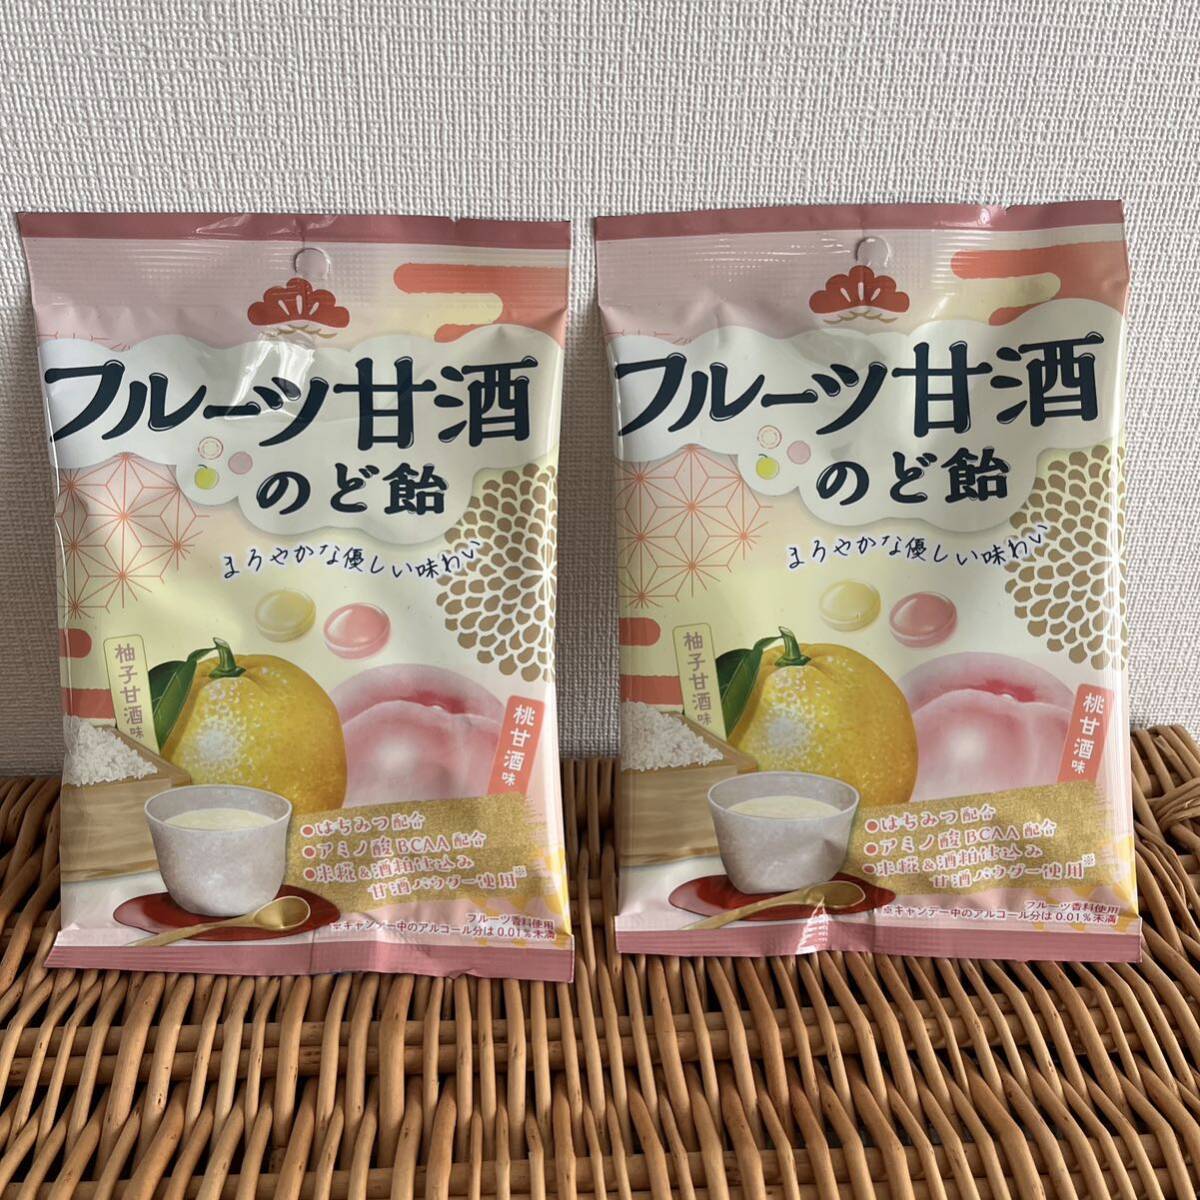 Фрукты Амазорский горло конфеты 2 сумки из 2 мешков Momotake Yuzu Amakake Honey Rice Koji koji саке саке конфет